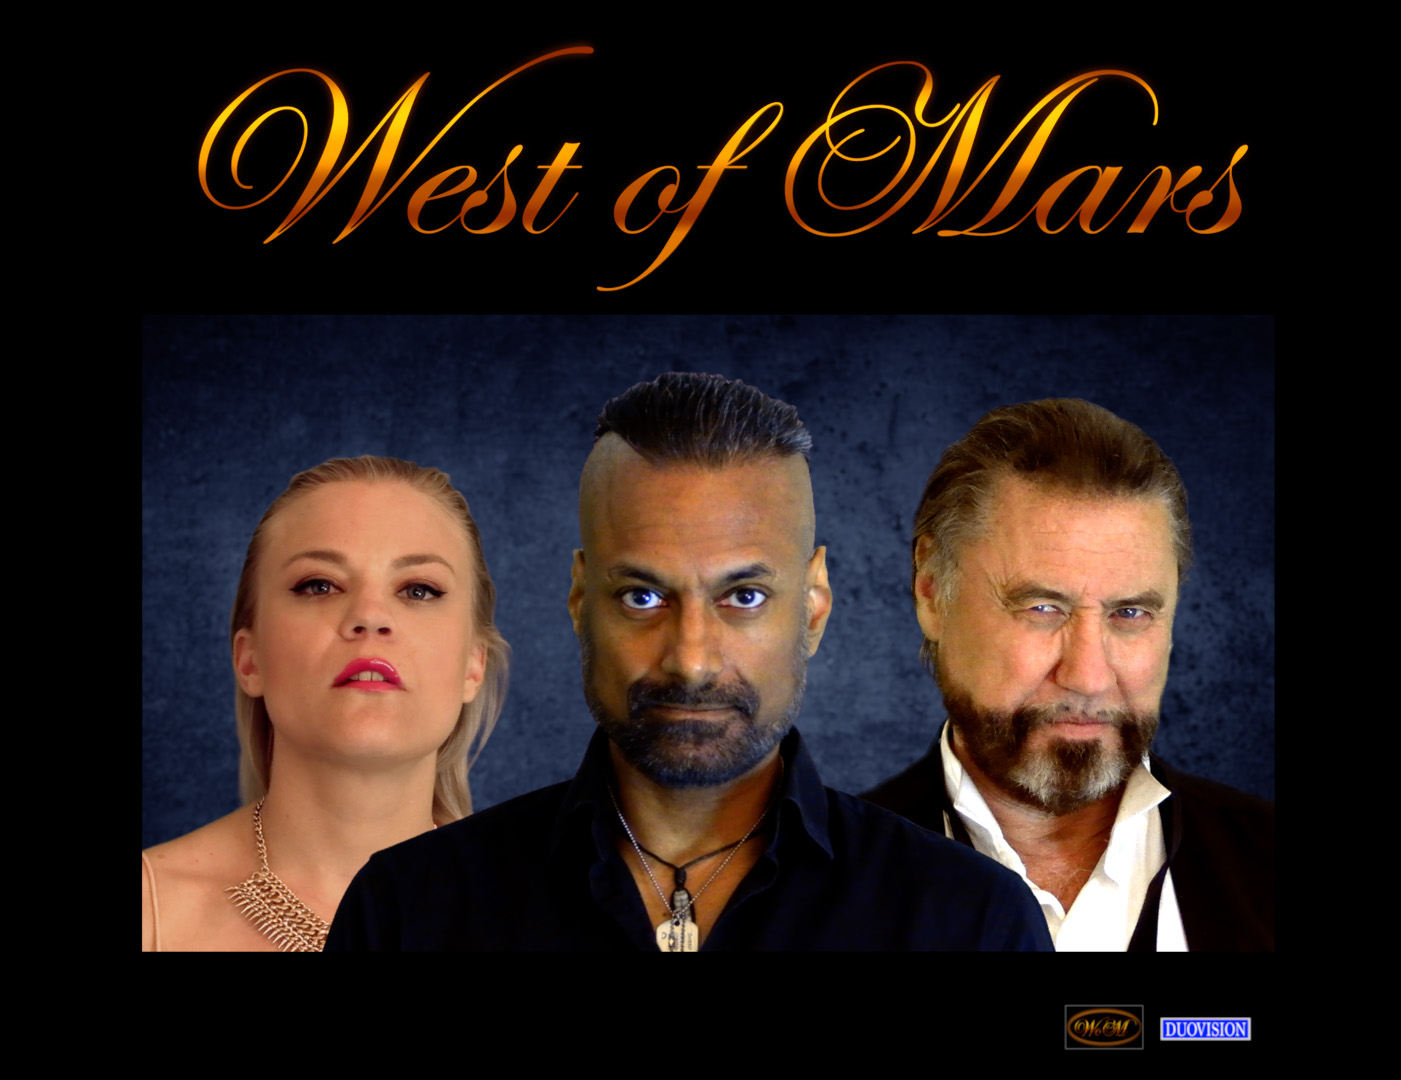 West of Mars